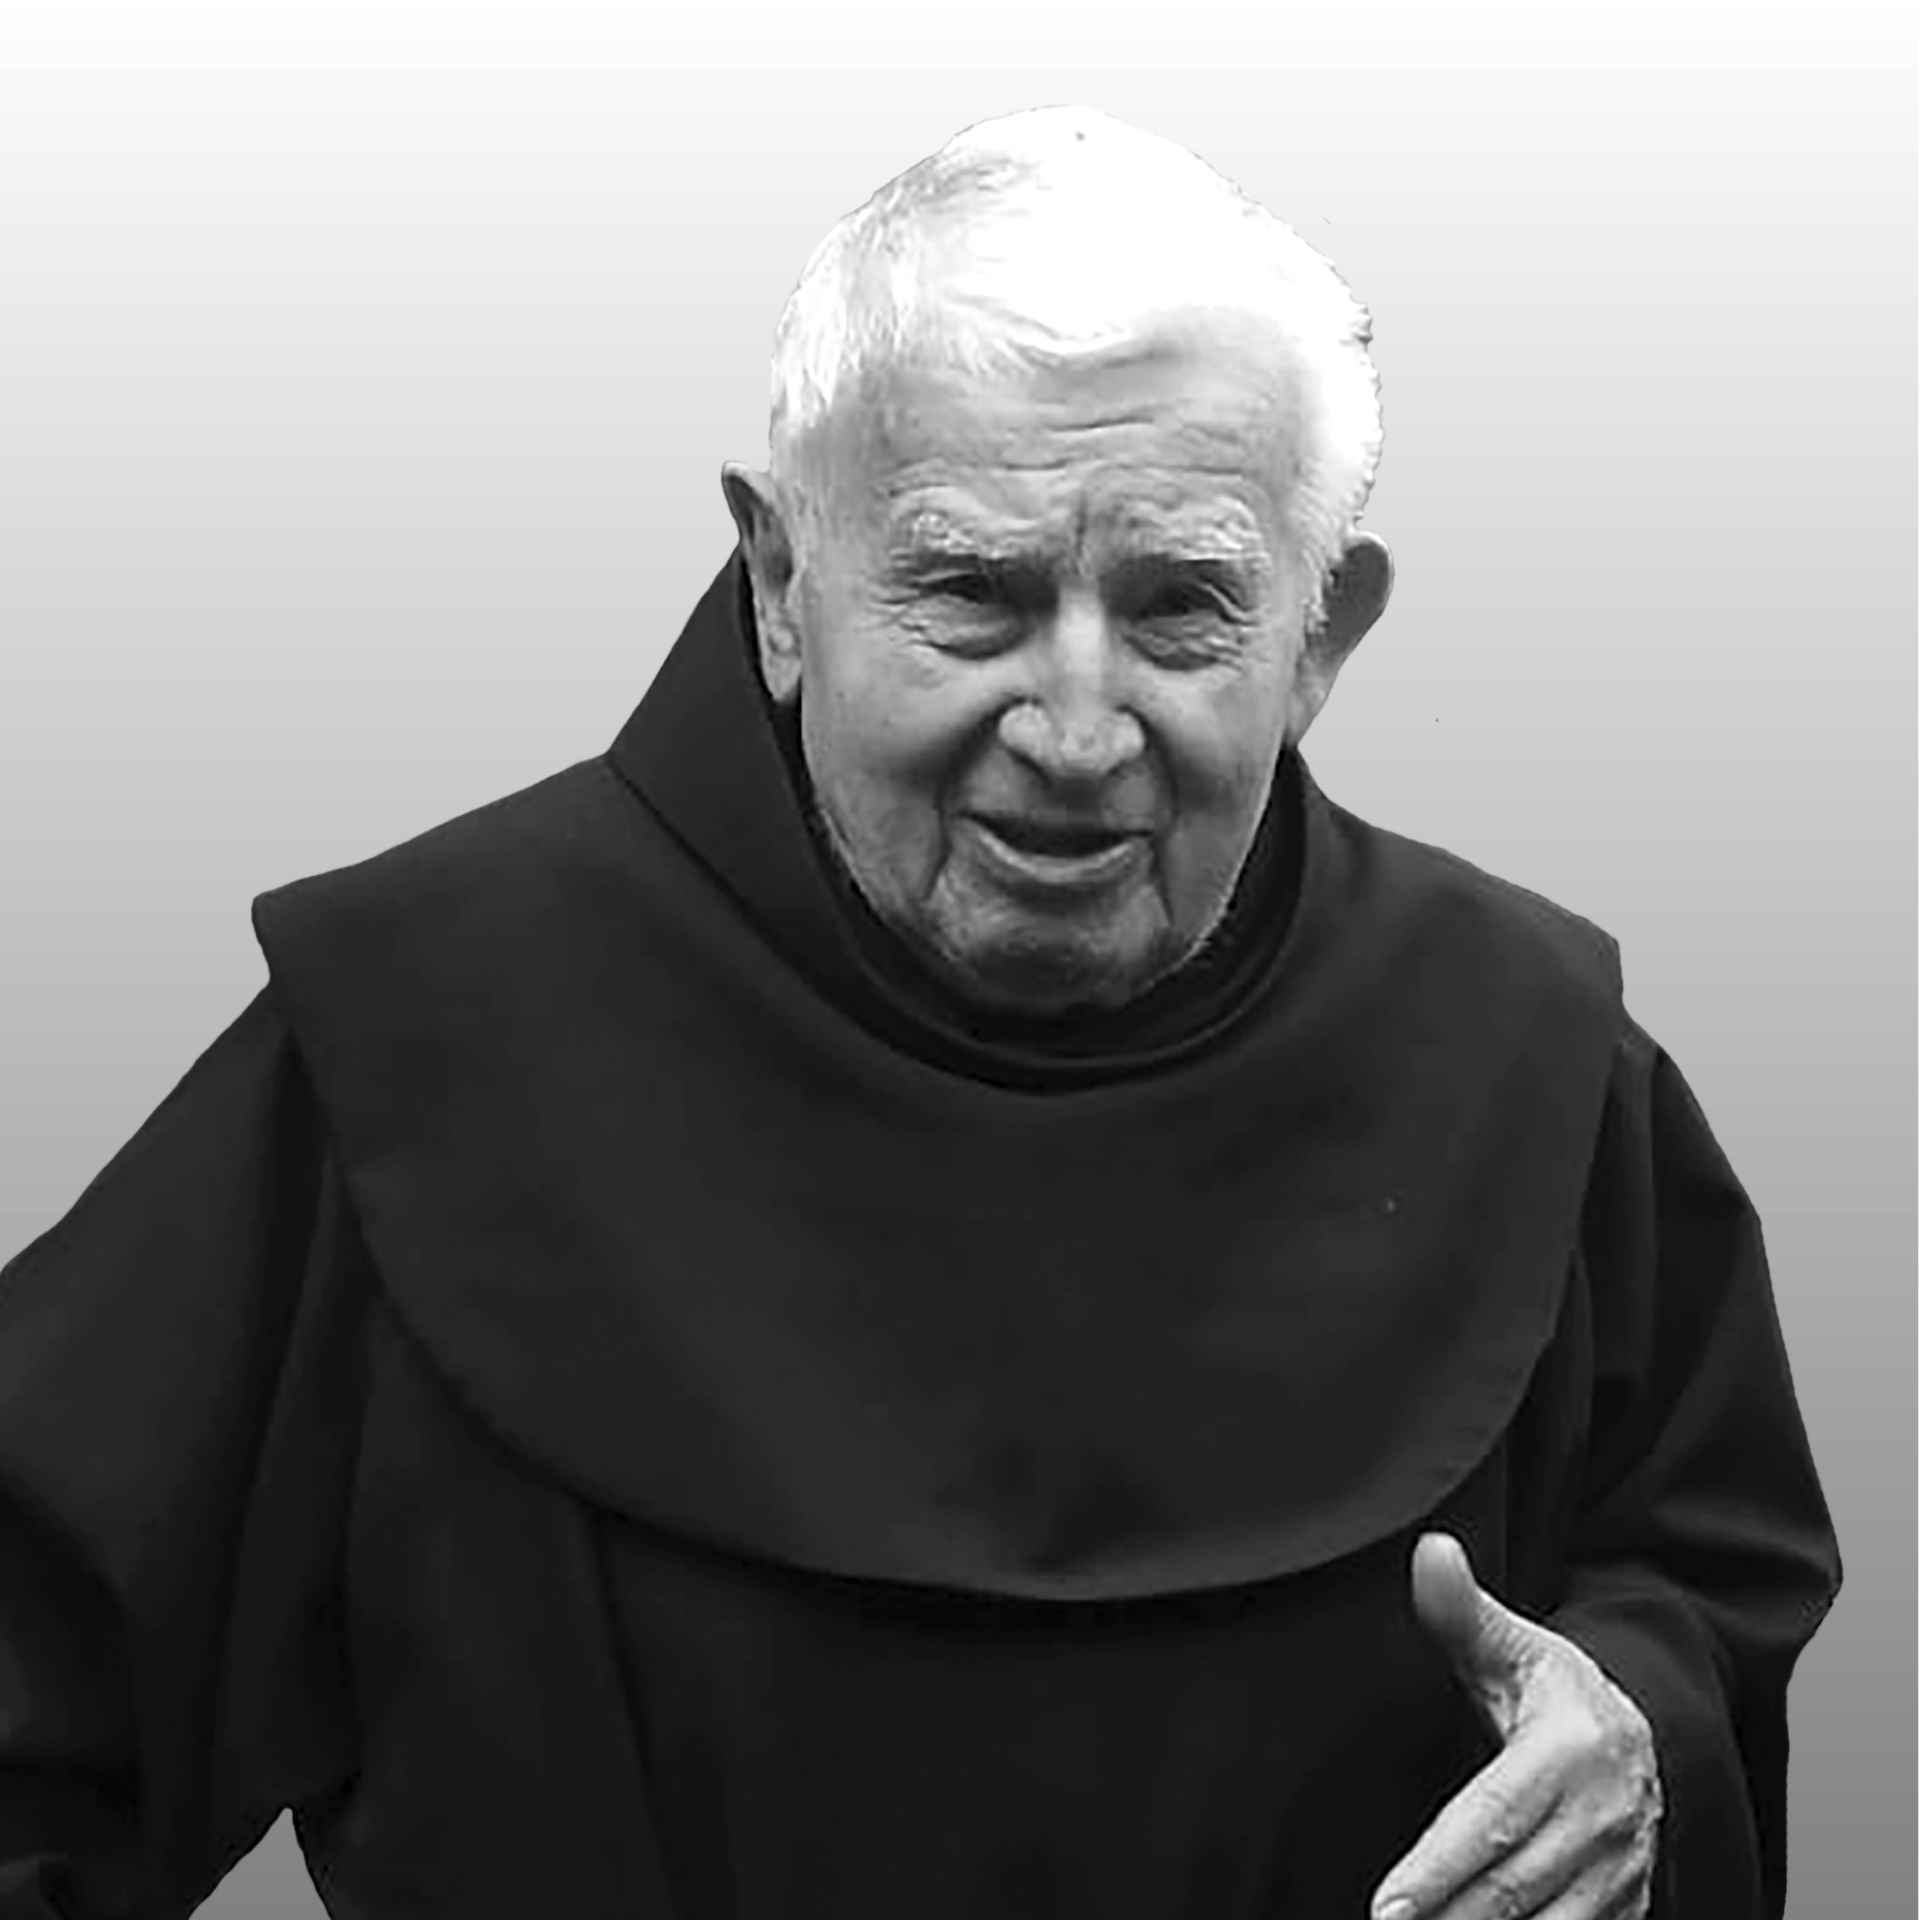 Falleció el sacerdote Herkulan Wróbel